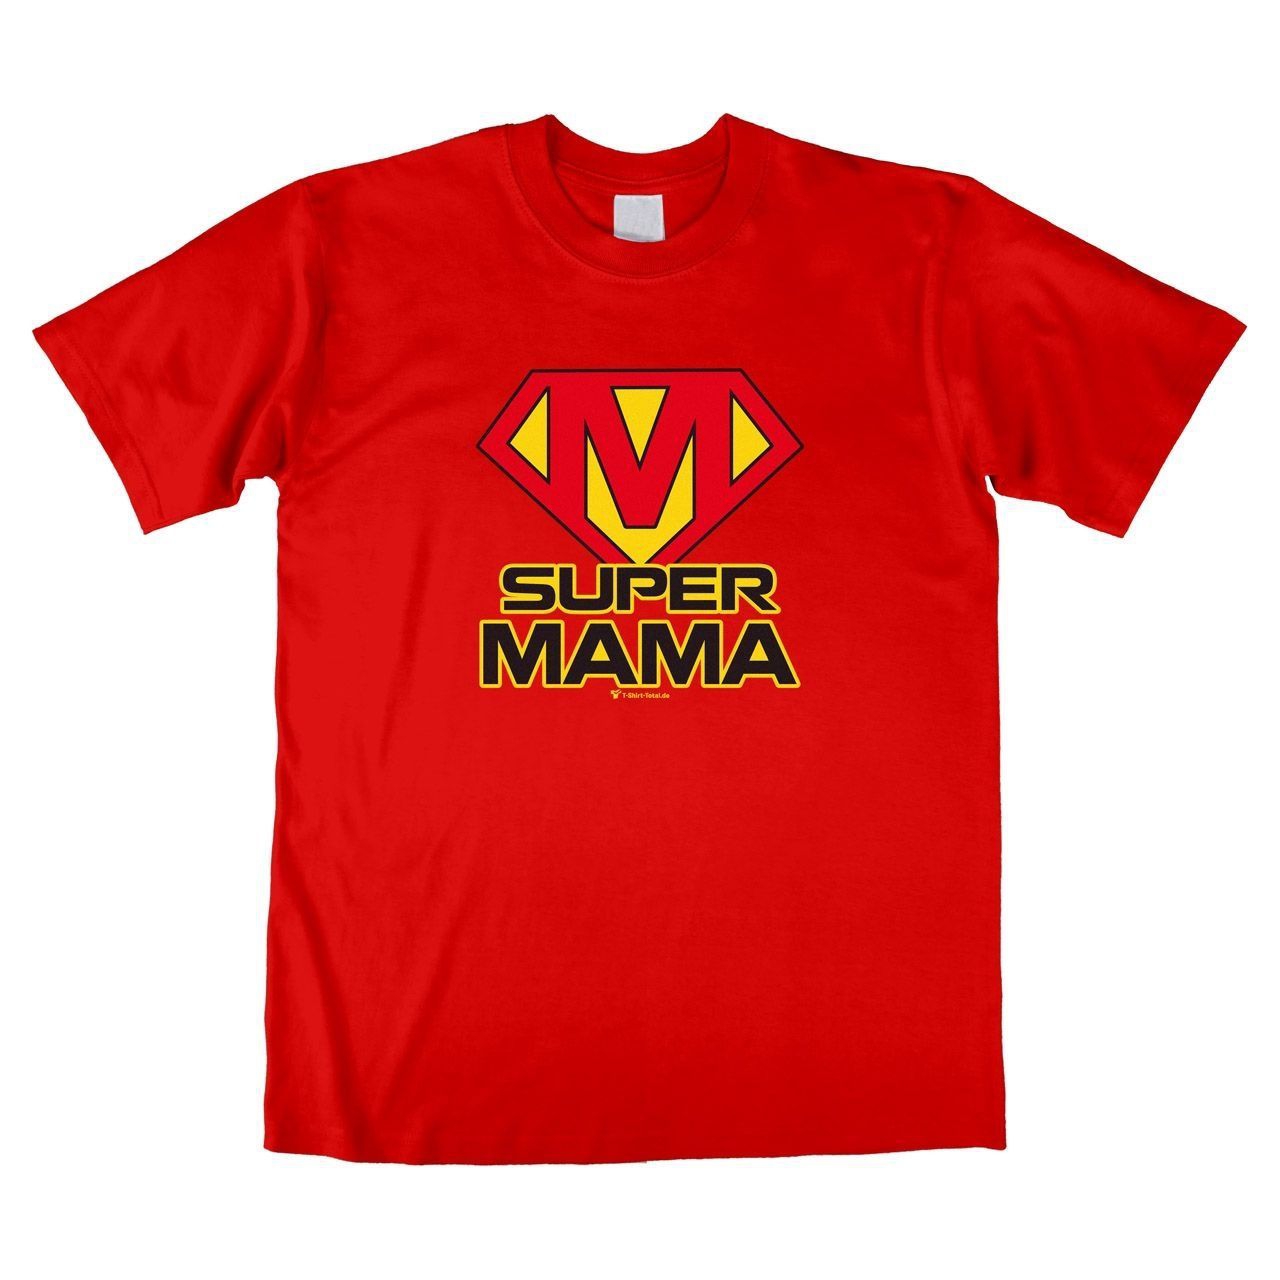 Super Mama Unisex T-Shirt rot Small